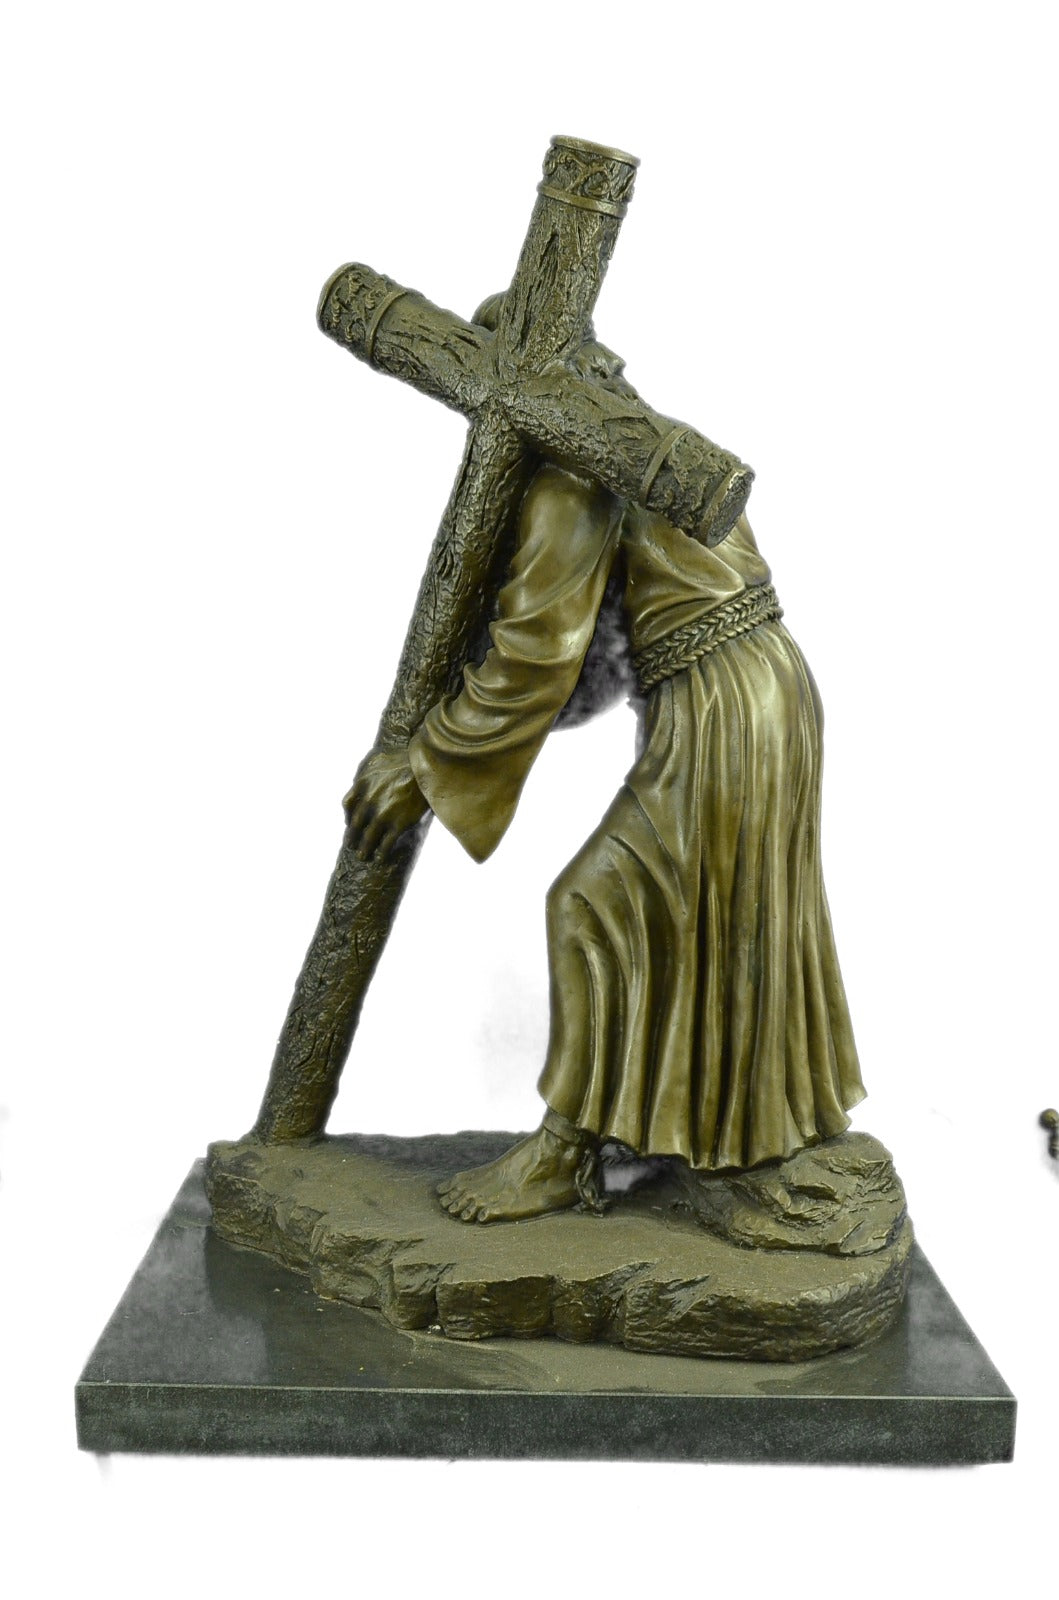 100% Solid Bronze Jesus Christ Church Home Decoration Sculpture Figurine Figure